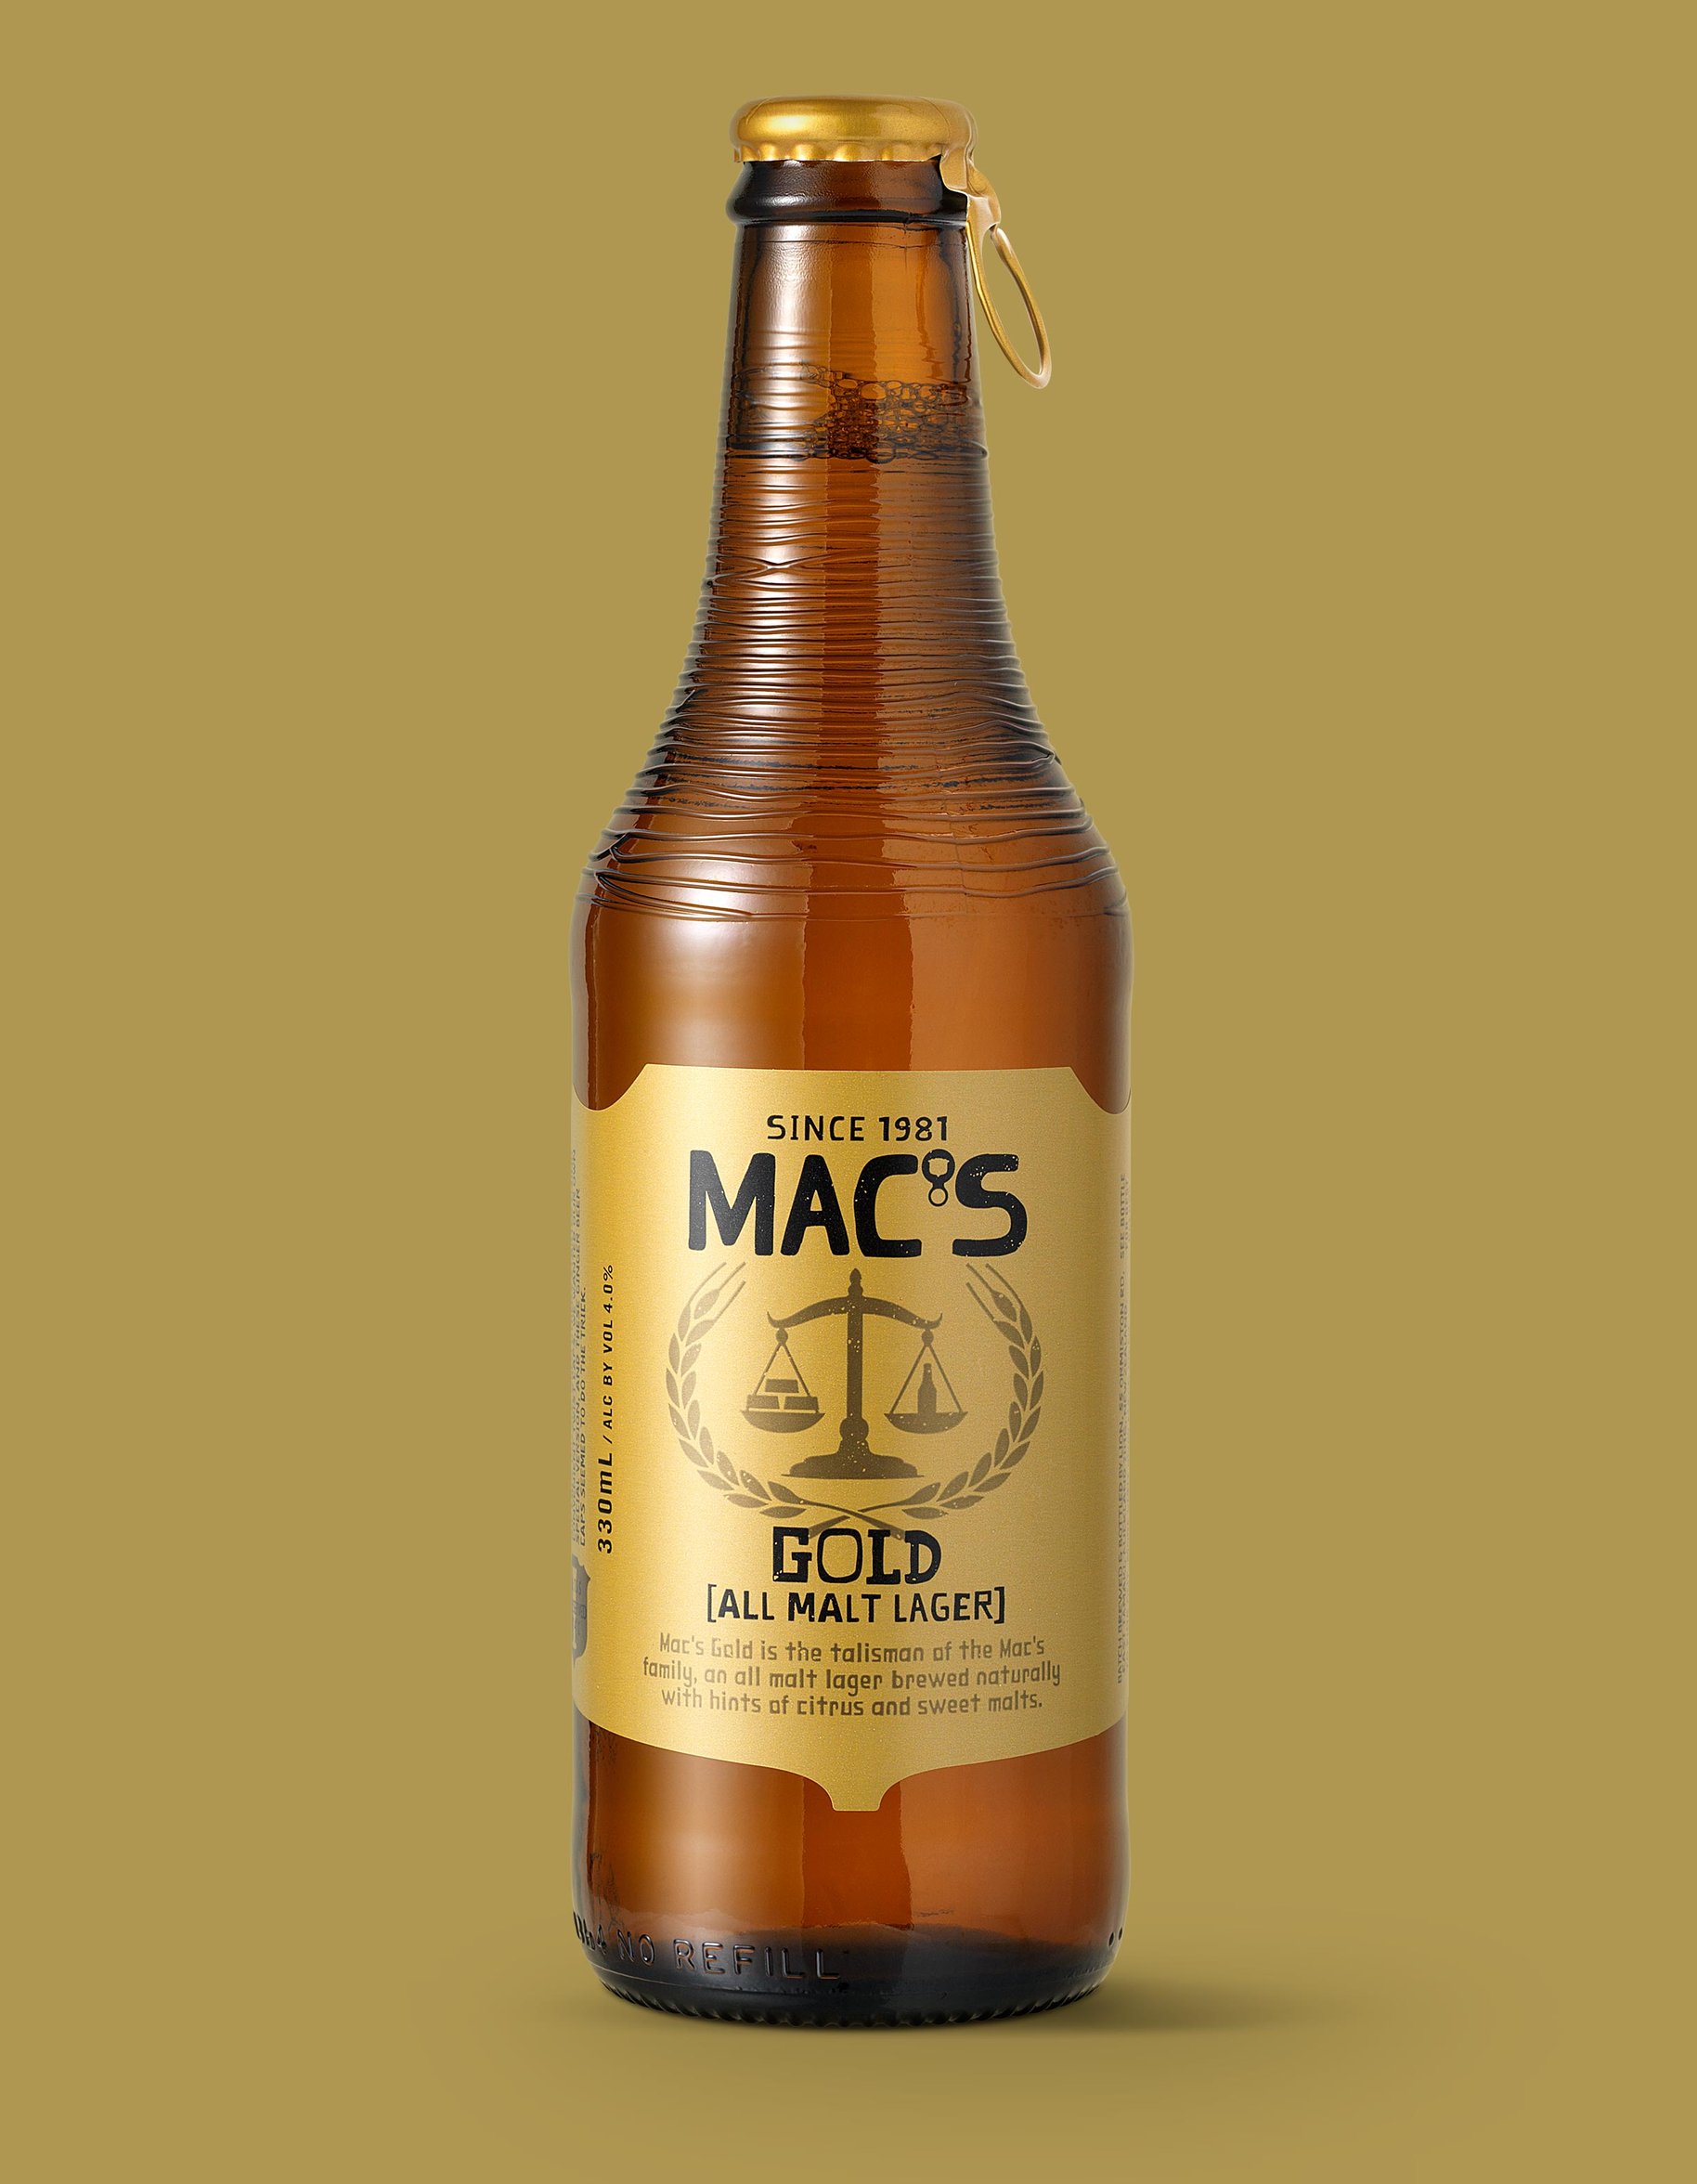 Macs Beer Gold Malt lager packaging